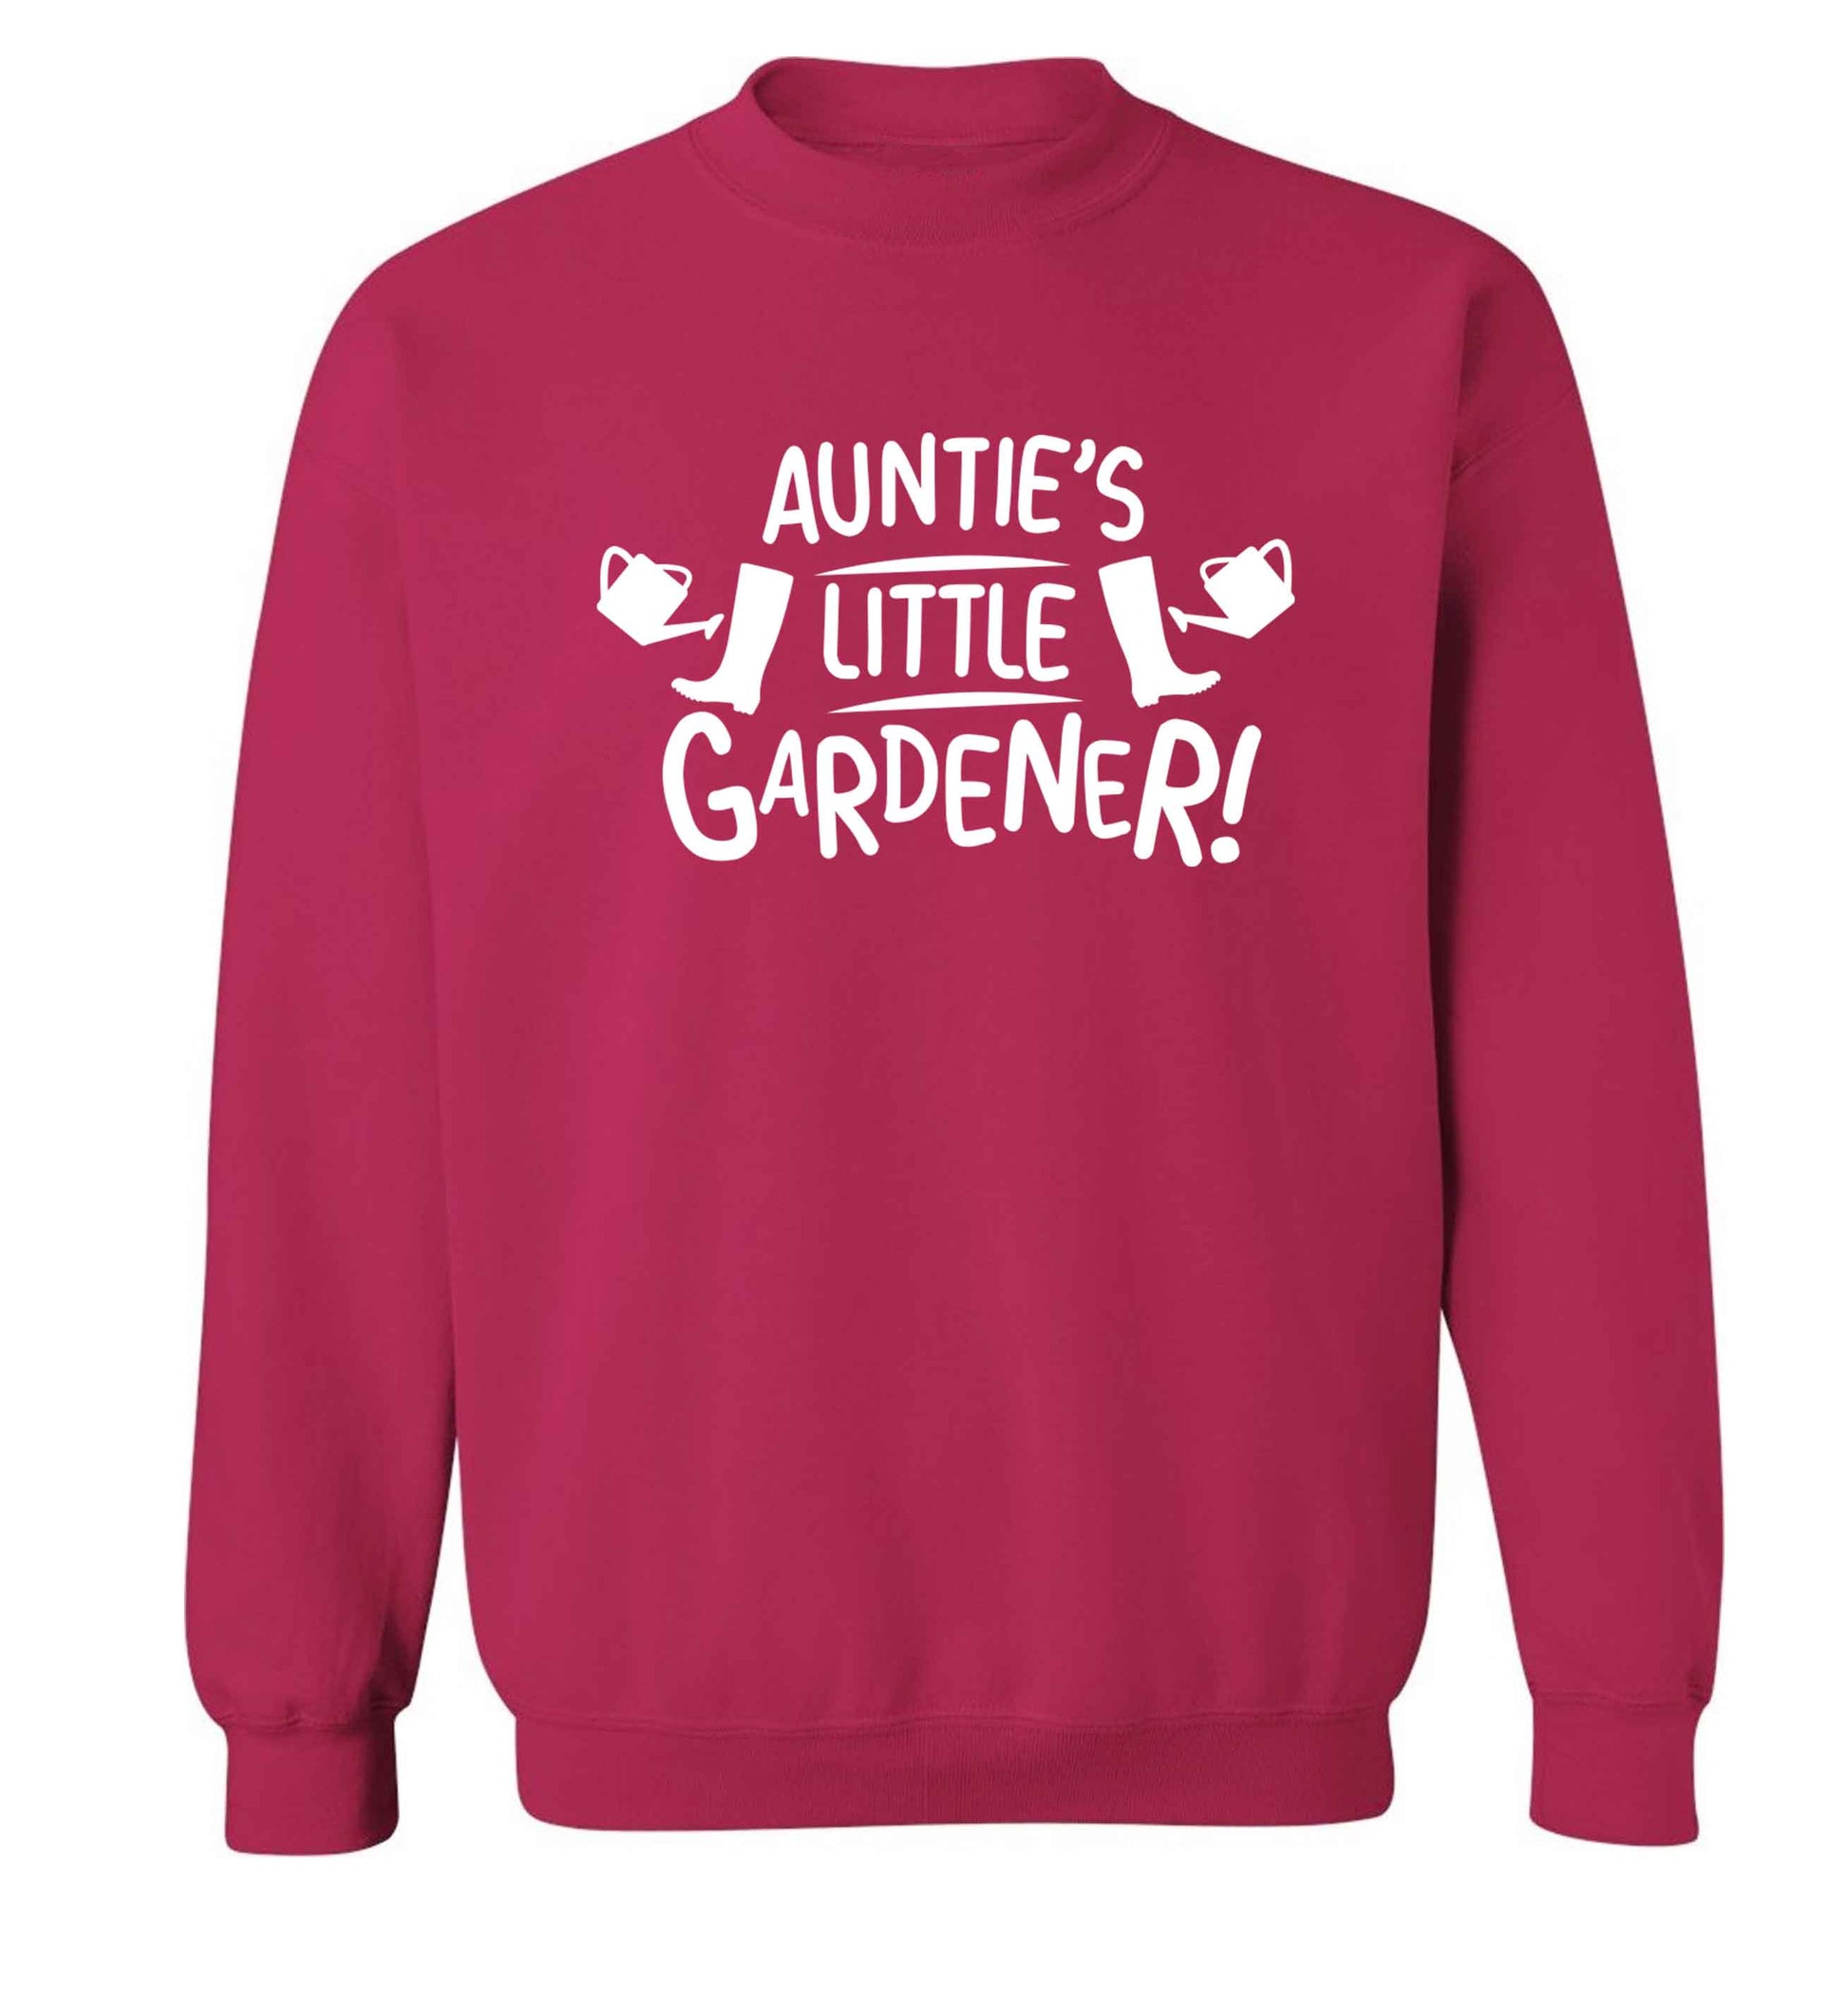 Auntie's little gardener Adult's unisex pink Sweater 2XL